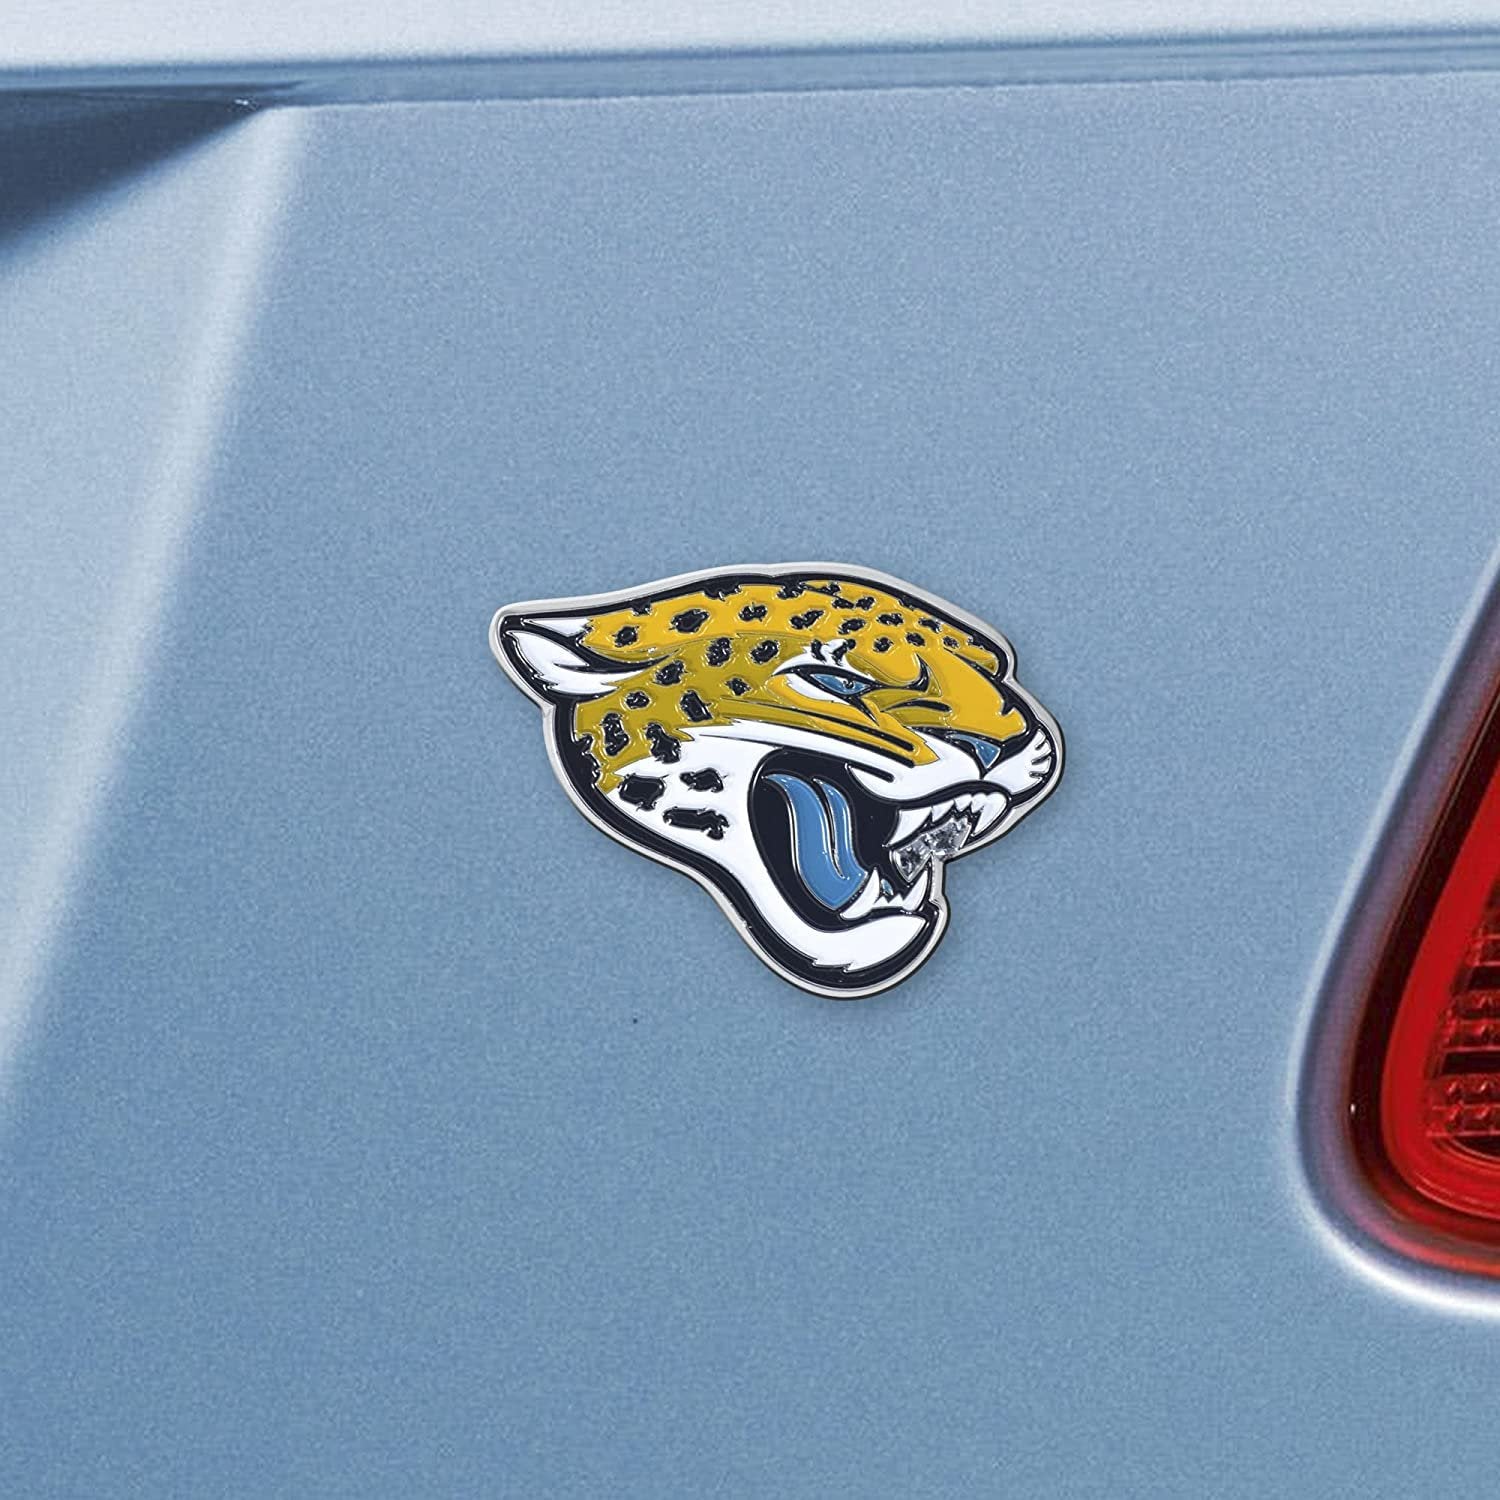 Jacksonville Jaguars Premium Solid Metal Raised Auto Emblem, Team Color, Shape Cut, Adhesive Backing